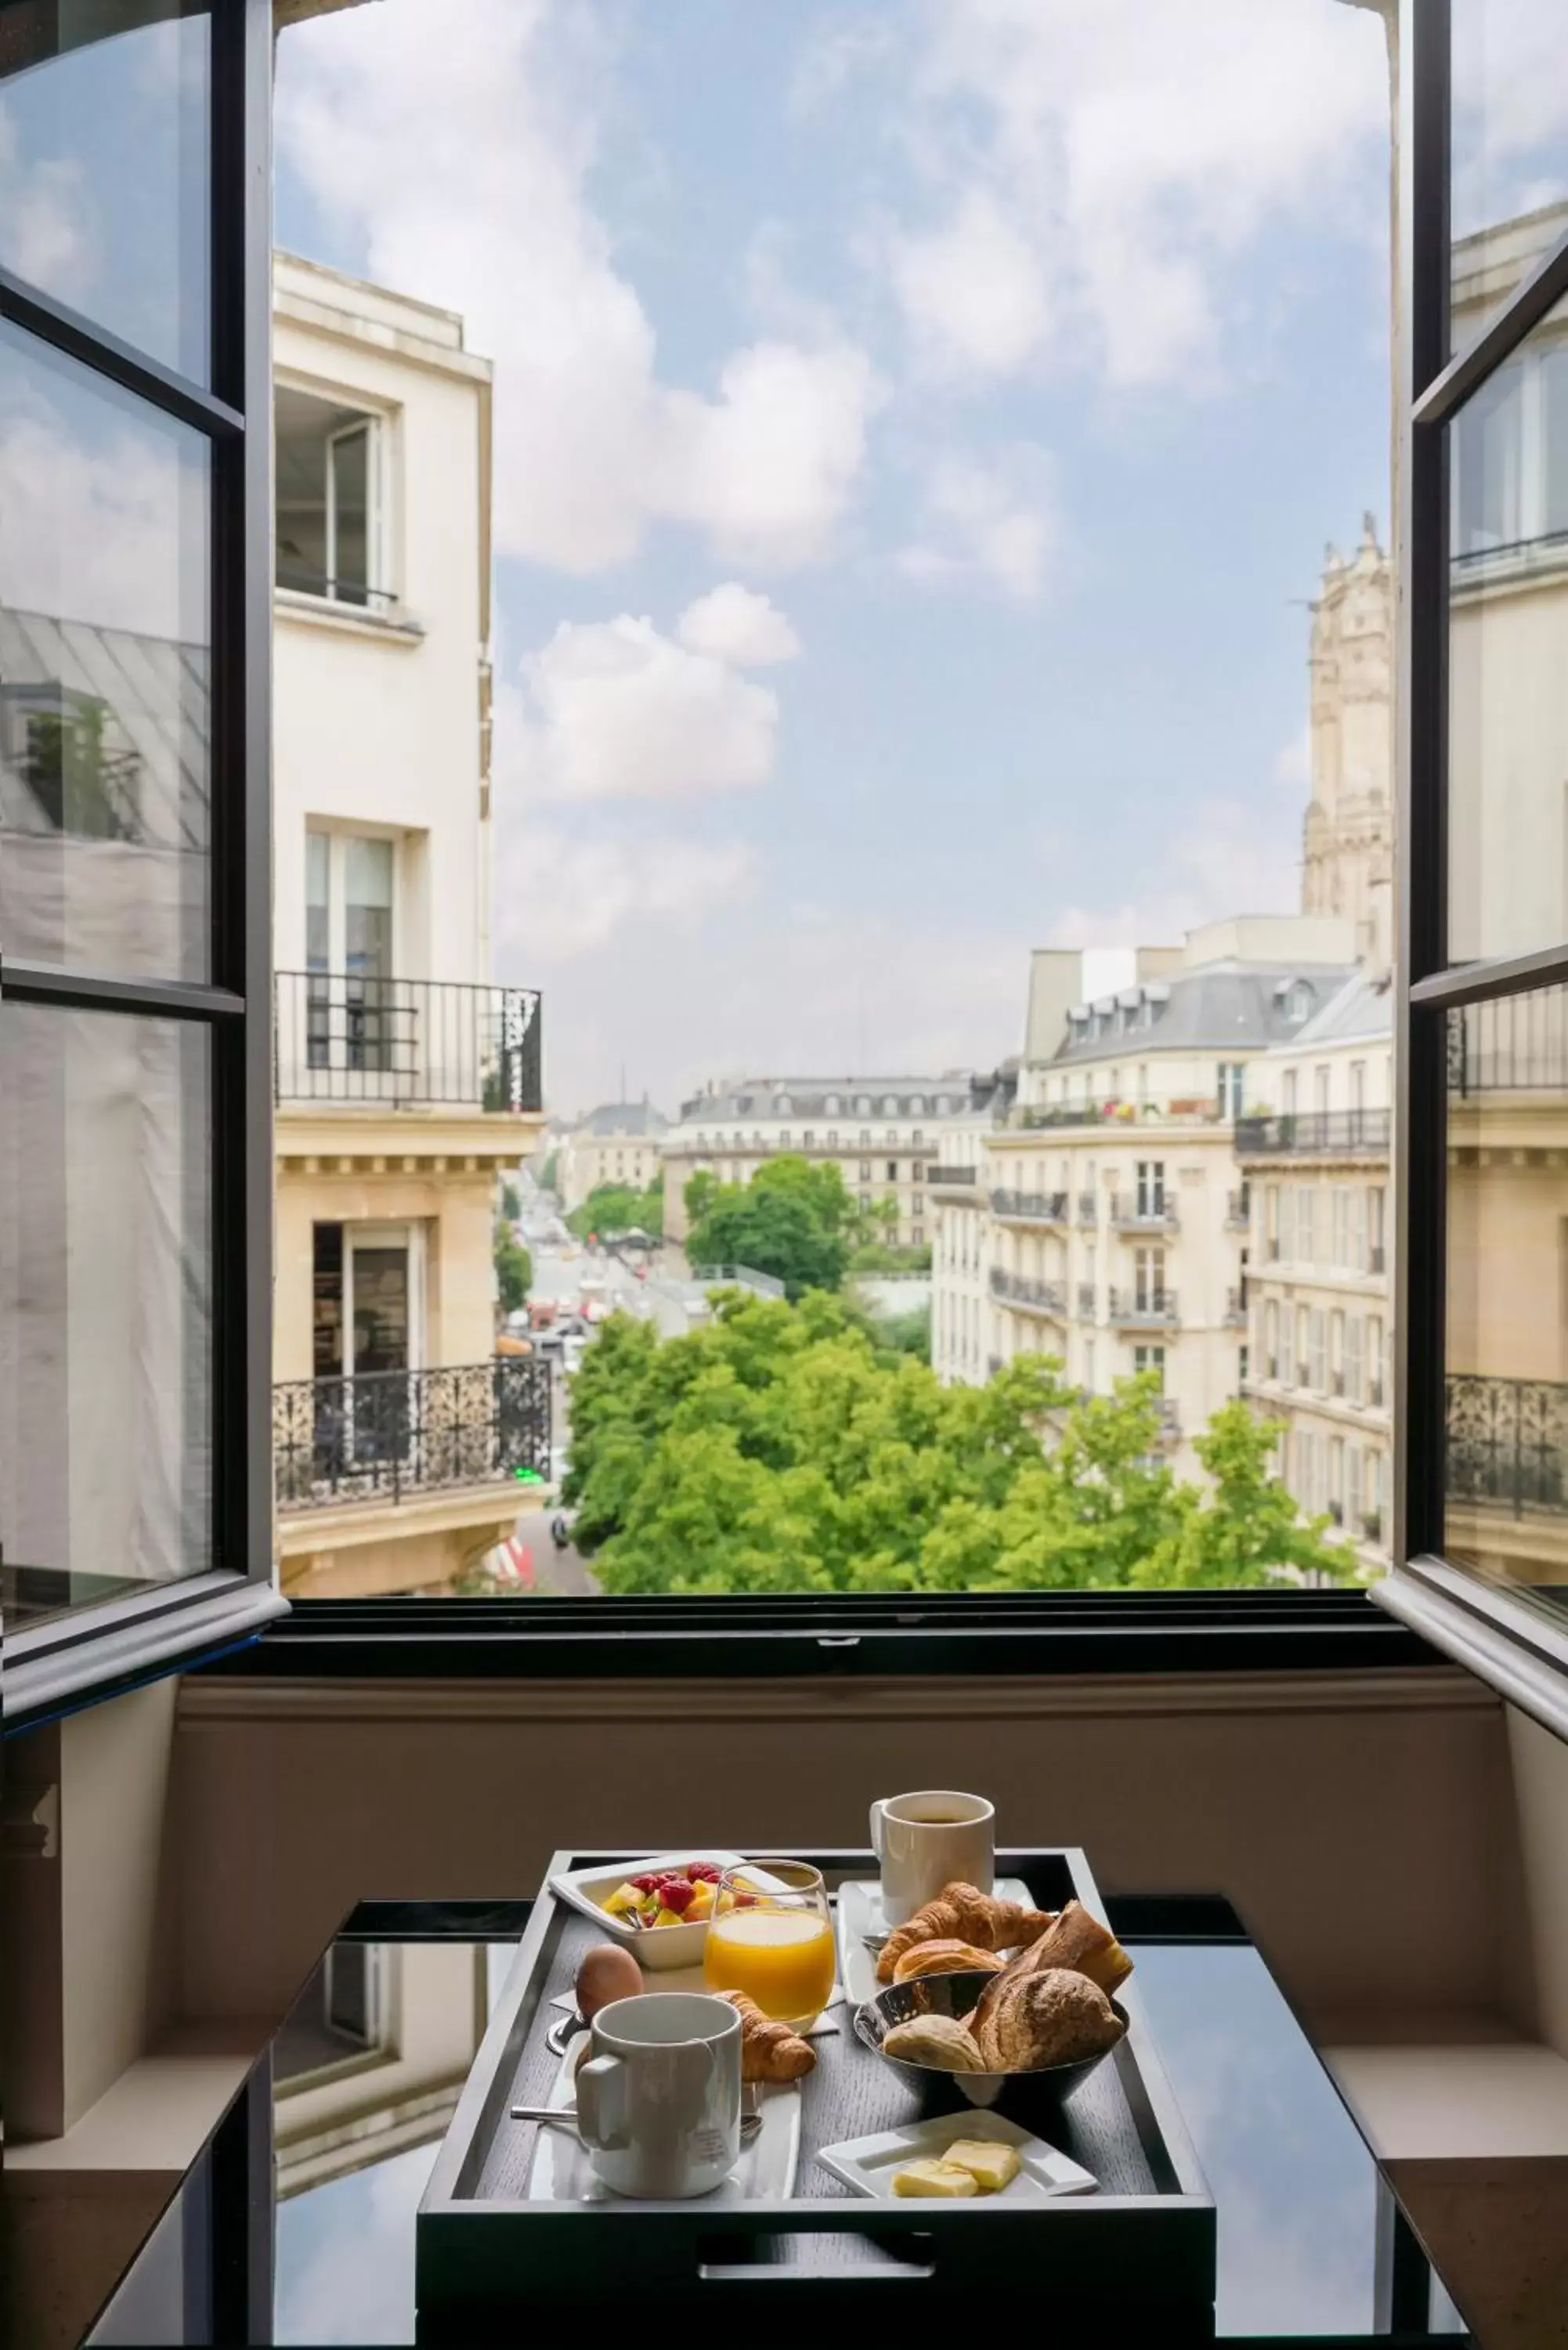 Continental breakfast in Hôtel Le Presbytère